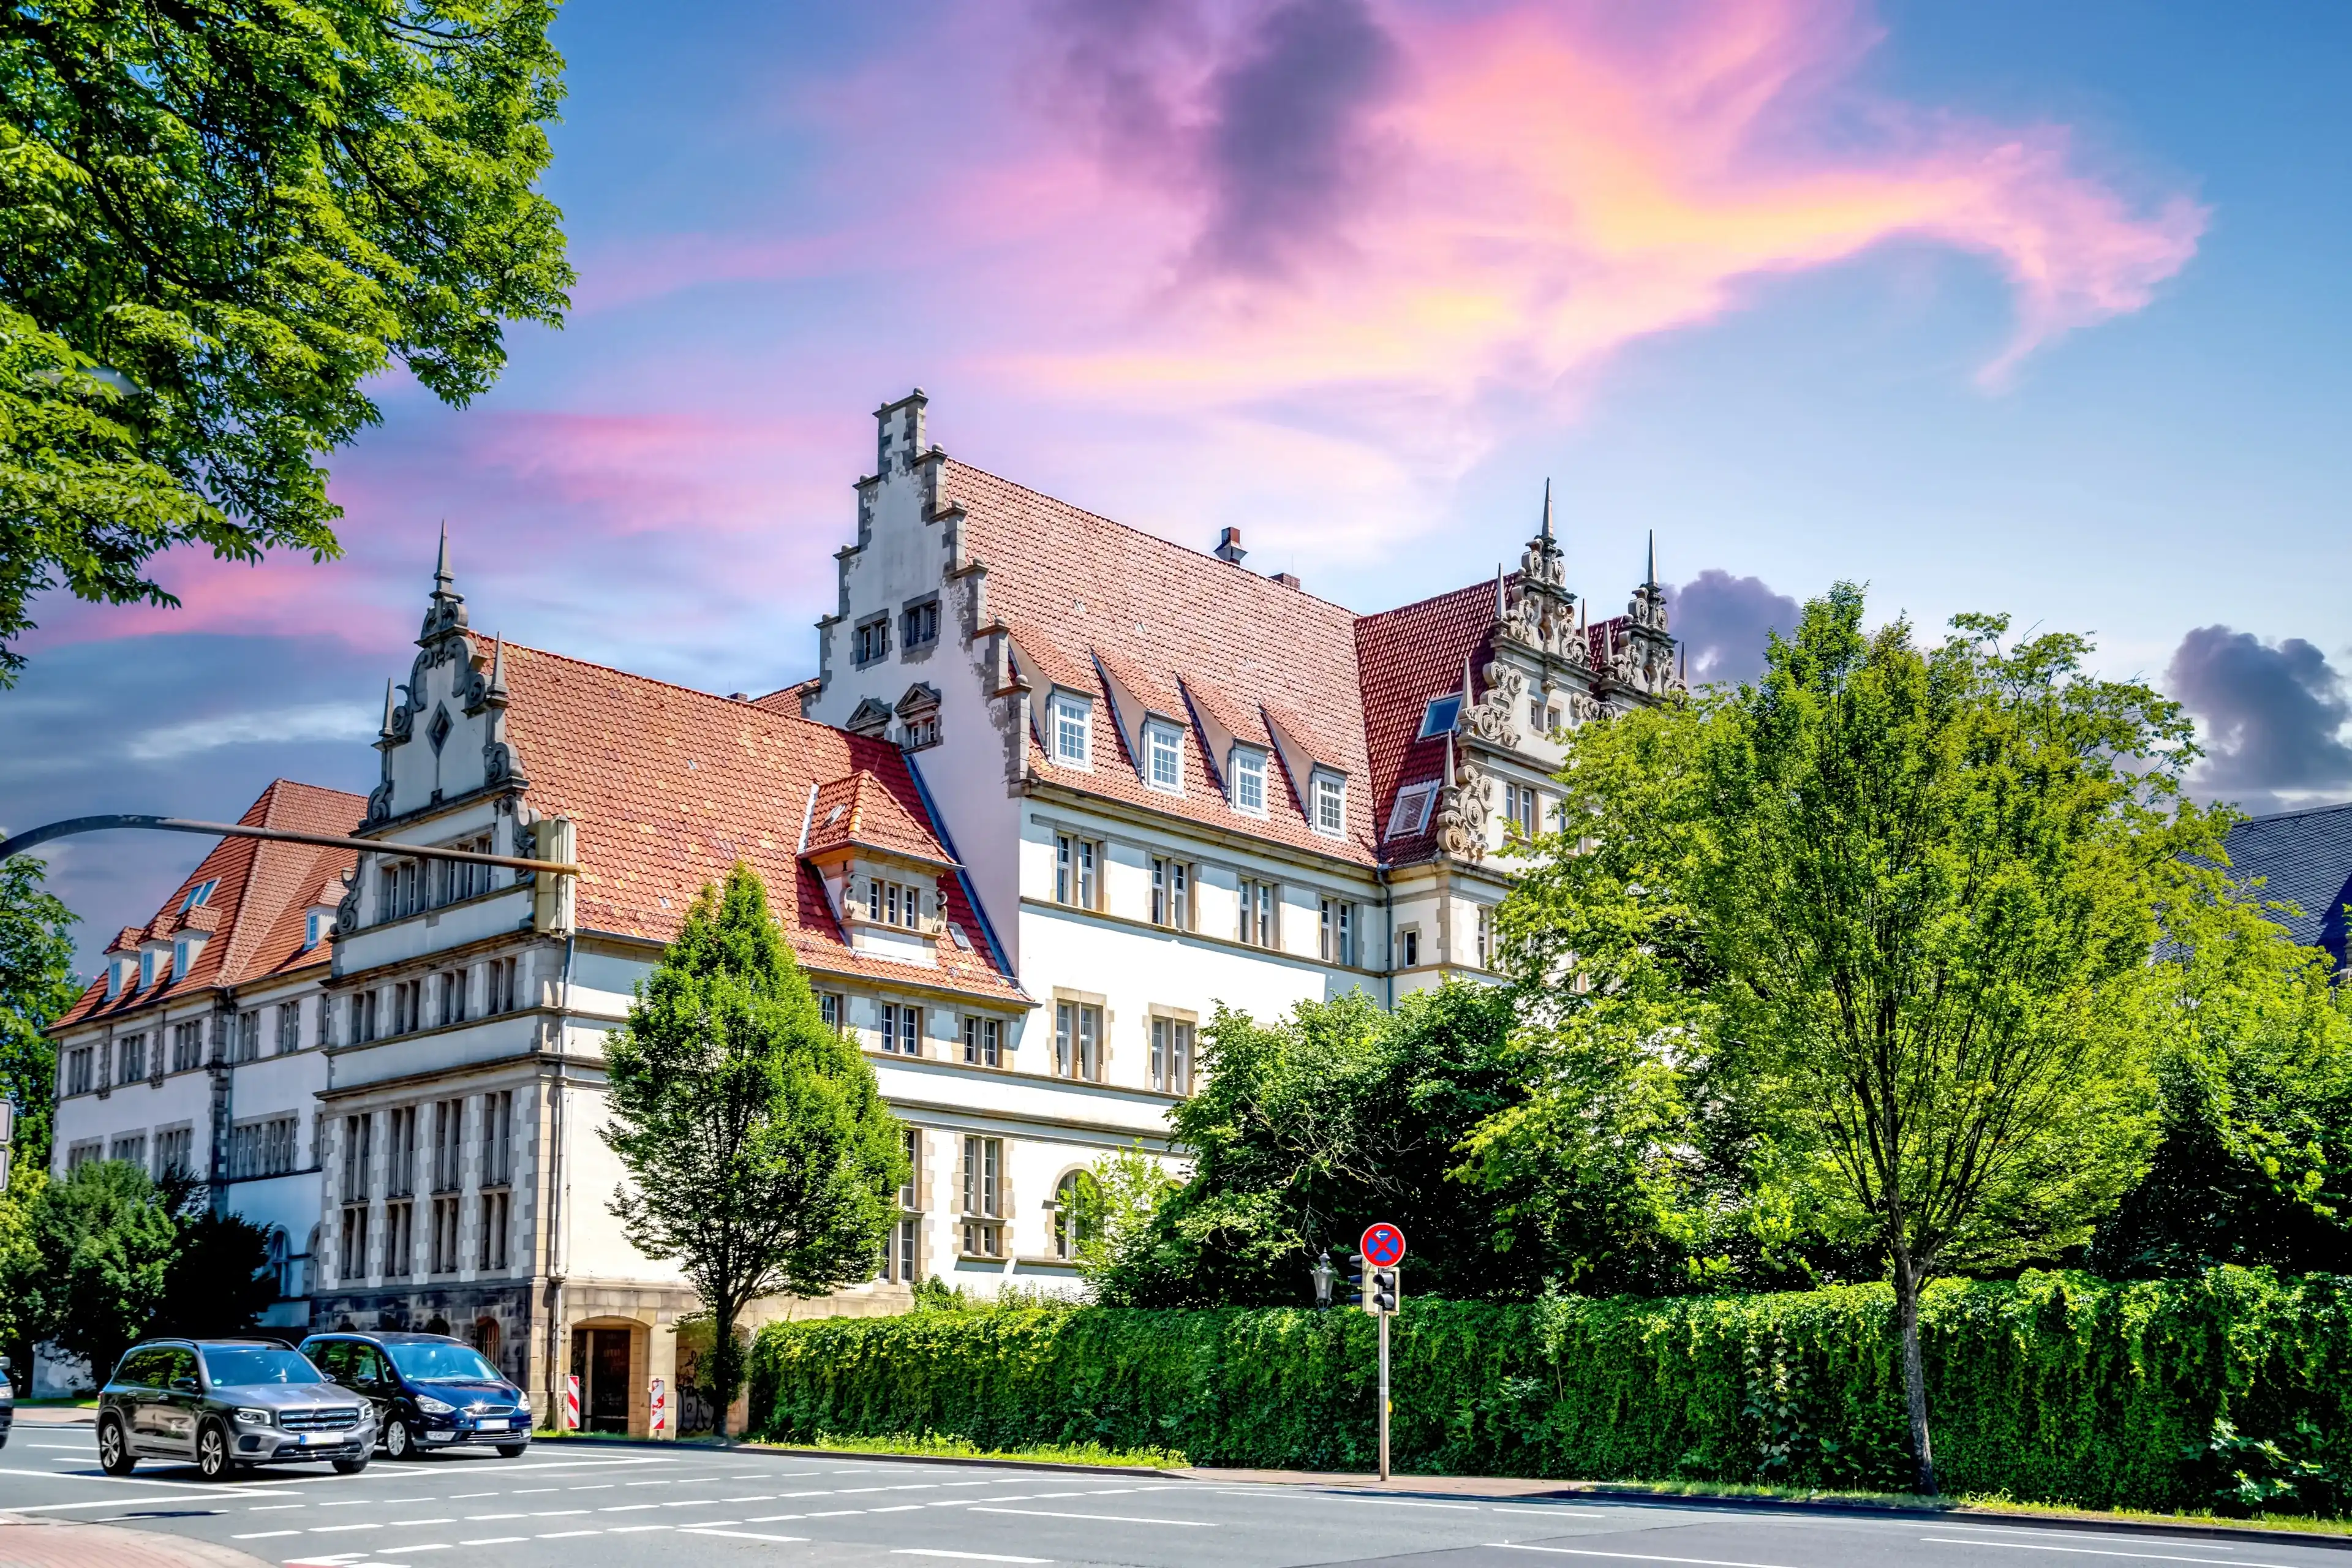 Best Minden hotels. Cheap hotels in Minden, Germany